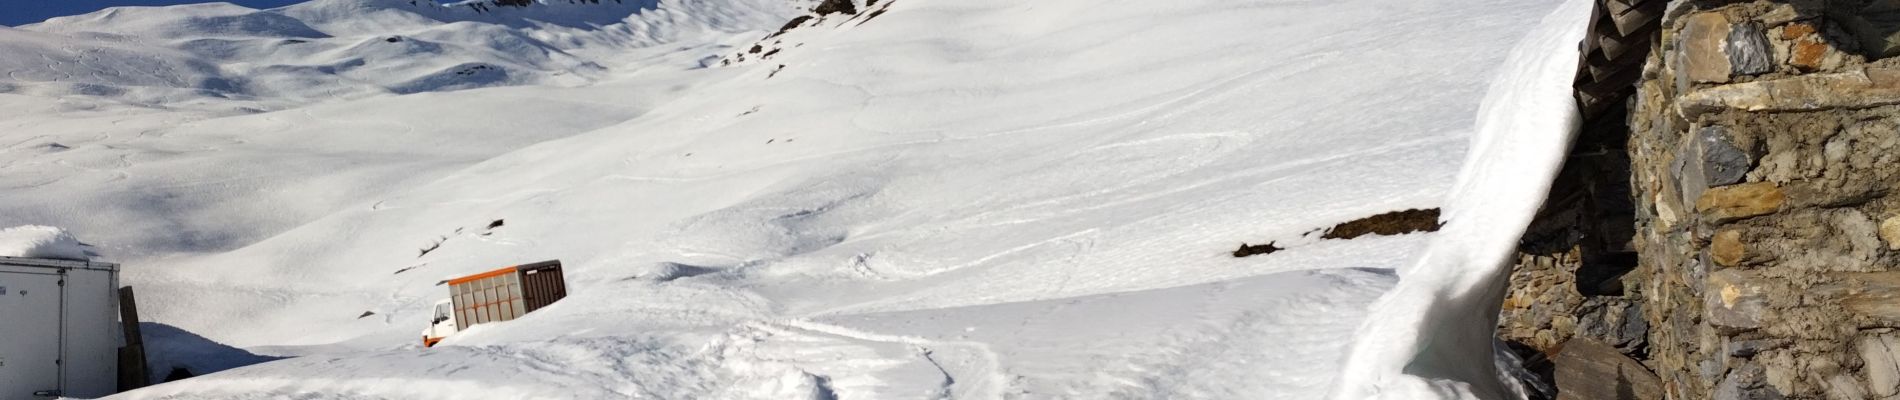 Tour Skiwanderen Bourg-Saint-Maurice - petite Aiguille de Praina - Photo